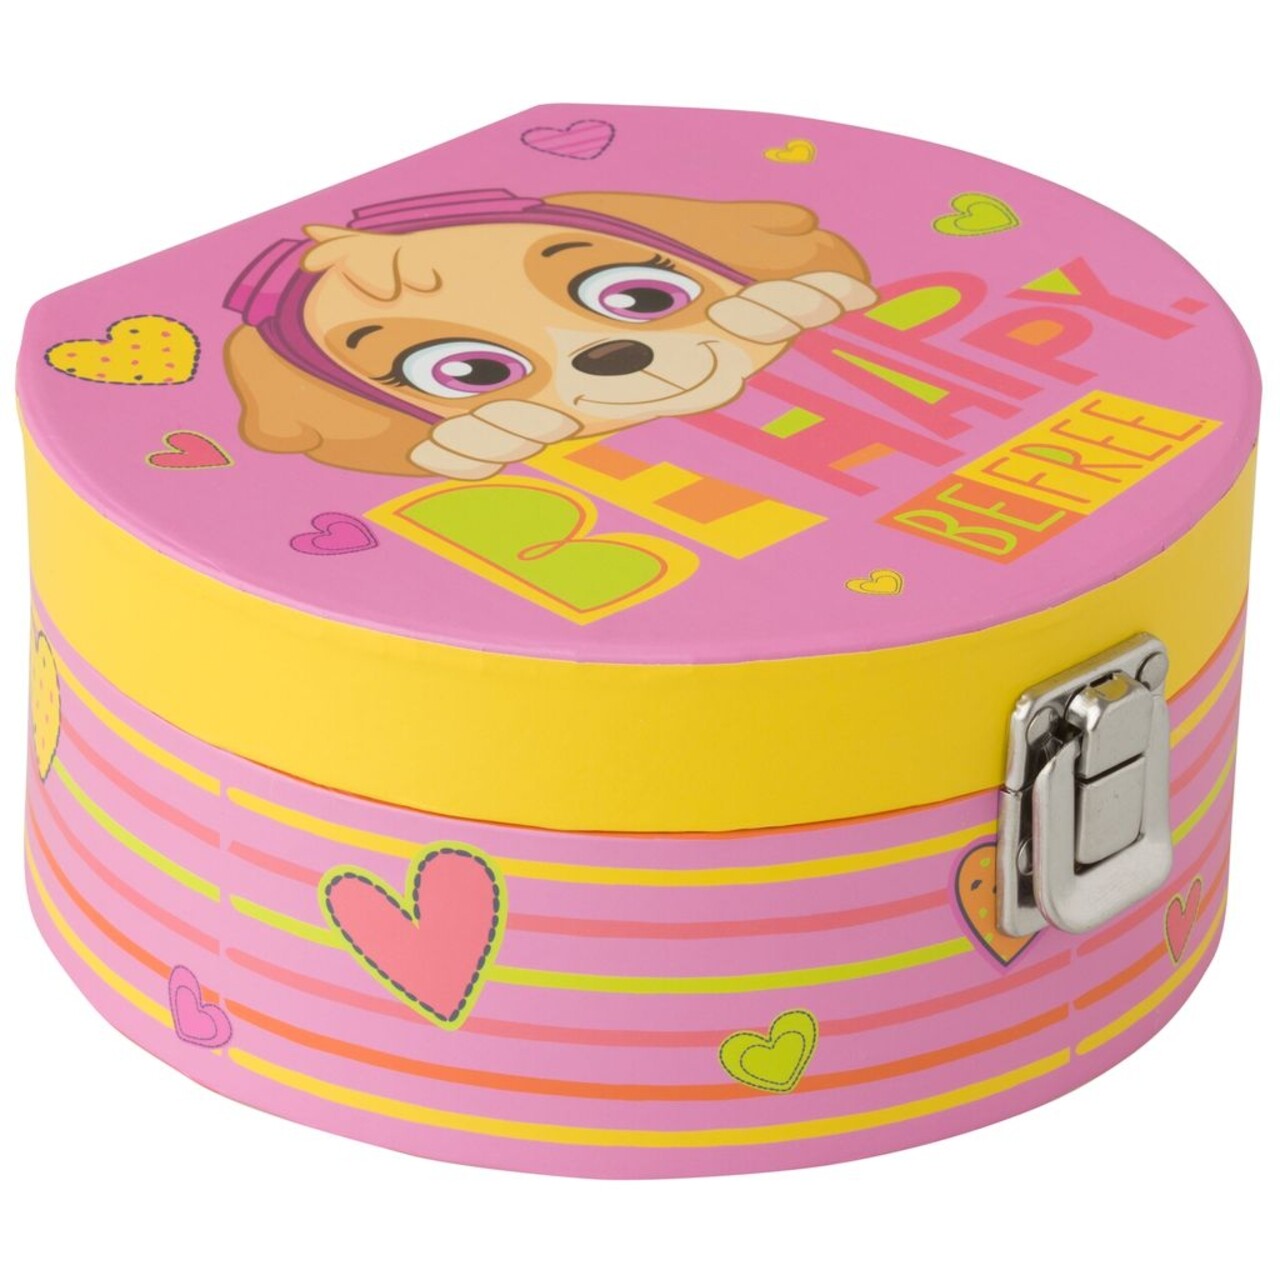 Cutie De Bijuterii Pentru Fetite Girls PSI Patrol, Nickelodeon, 17x15.5x8 Cm, Roz